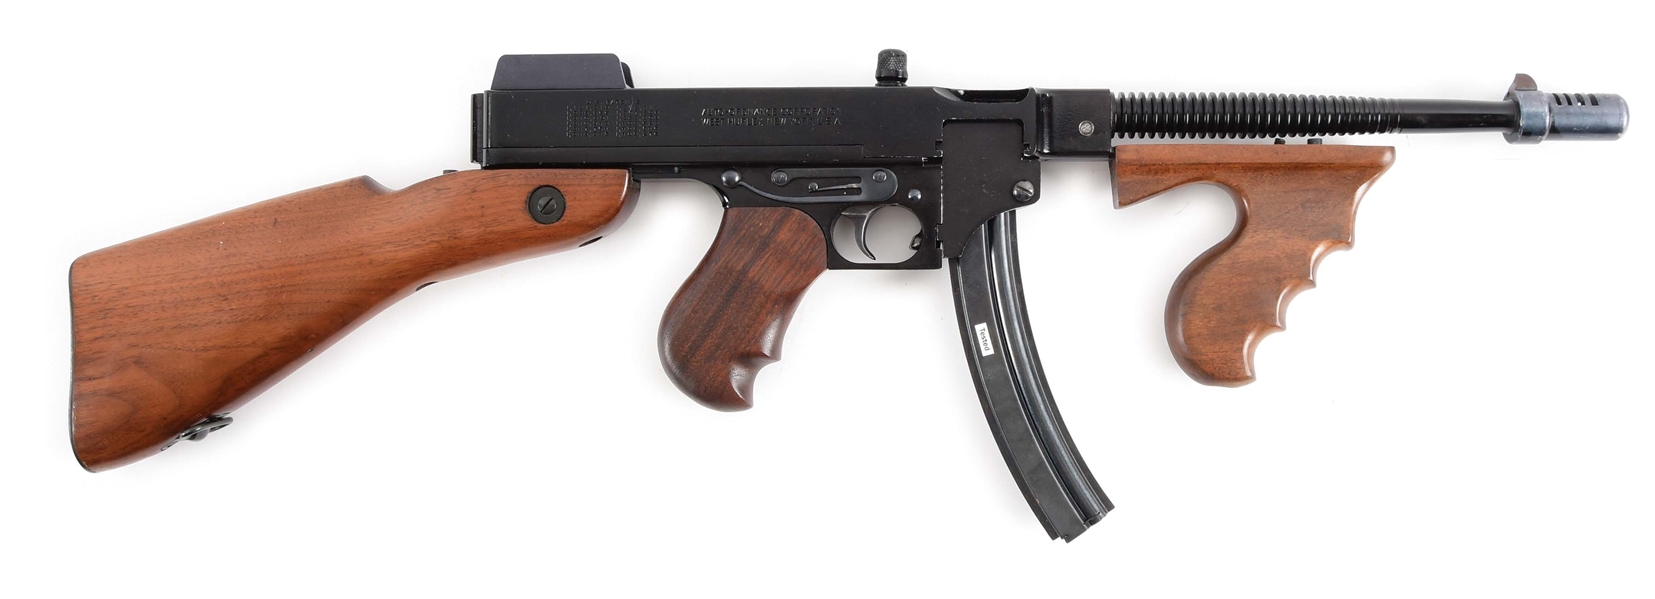 (N) SCARCE AND POPULAR AUTO ORDNANCE MODEL 1928 A22 THOMPSON MACHINE GUN IN .22 LR (CURIO AND RELIC).